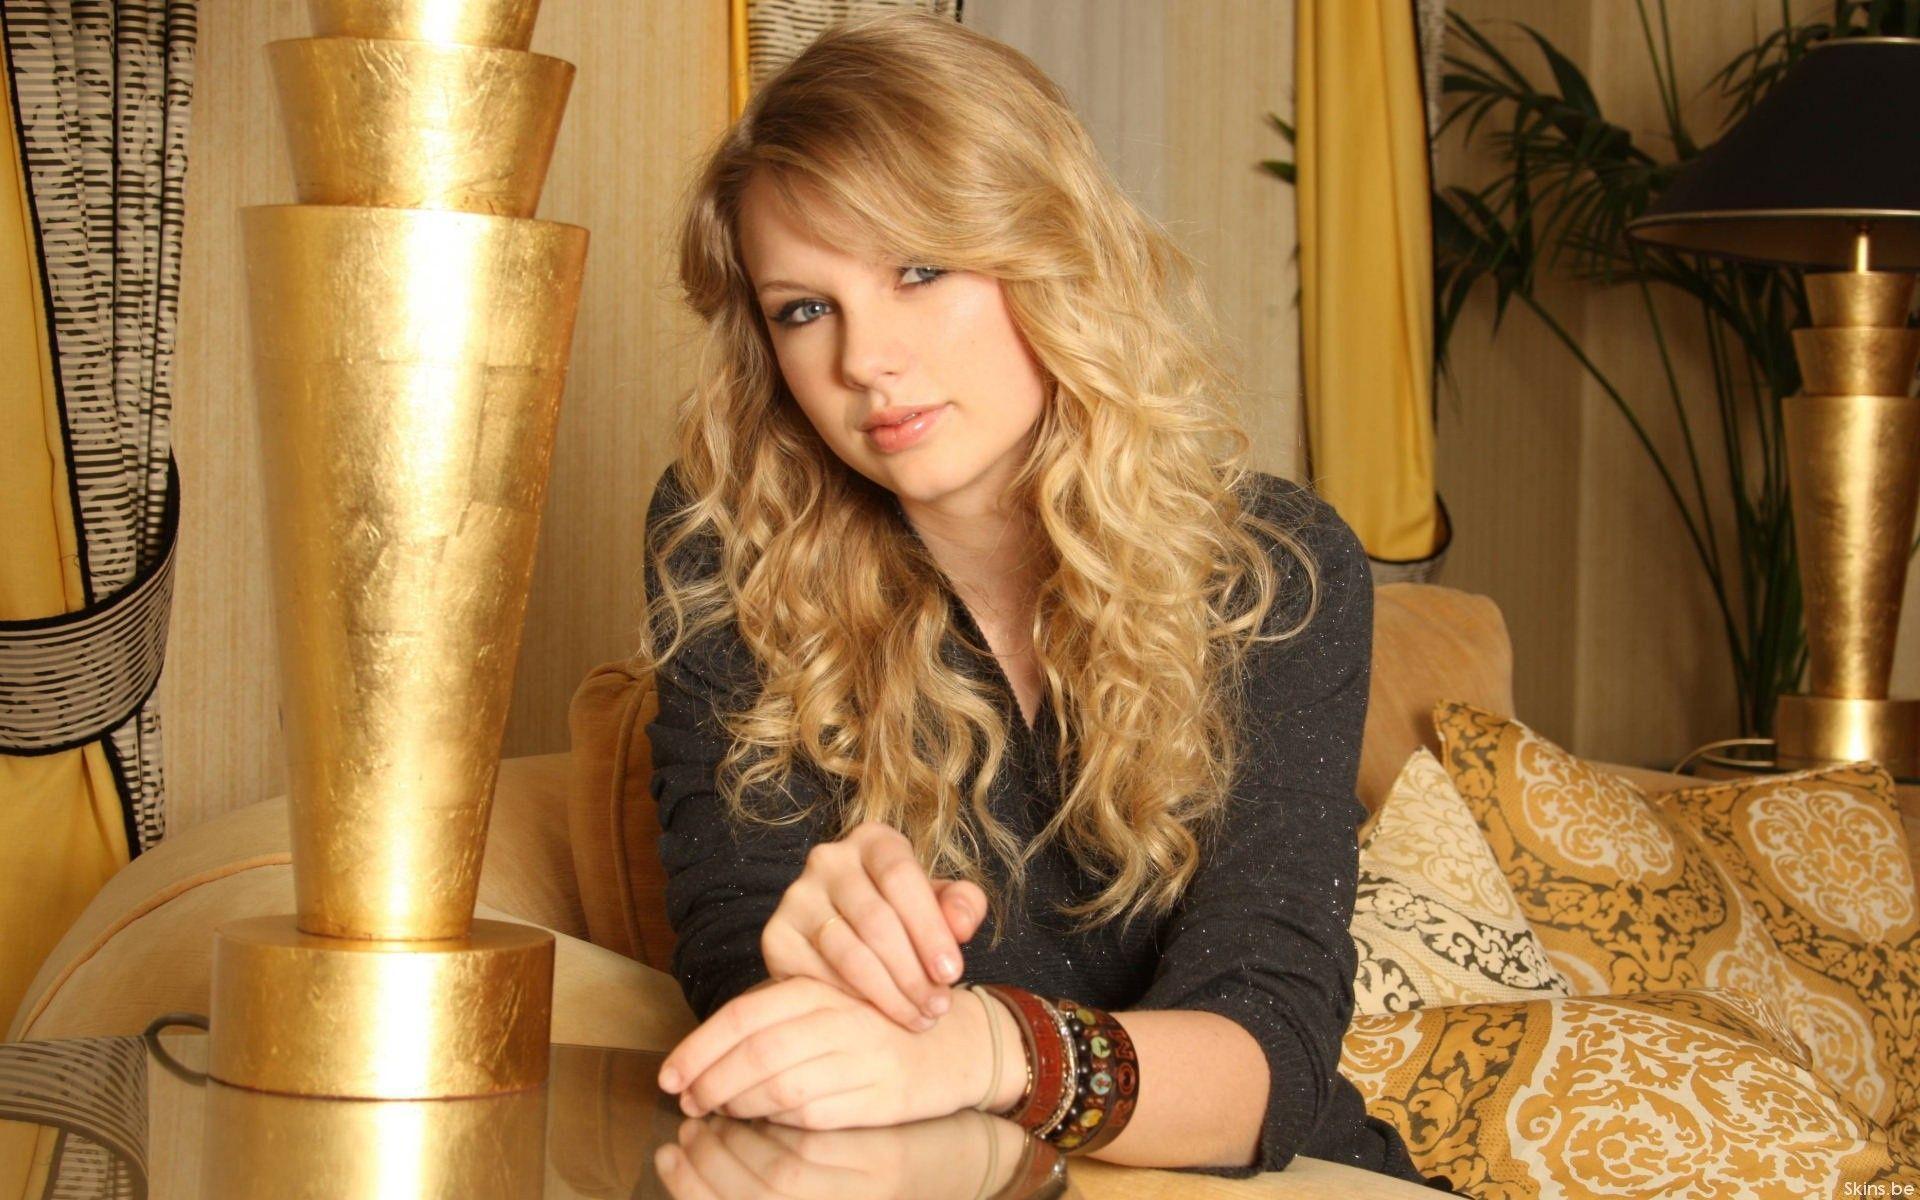 Gorgeous Taylor Swift Wallpaper. HD Image Wallpaper